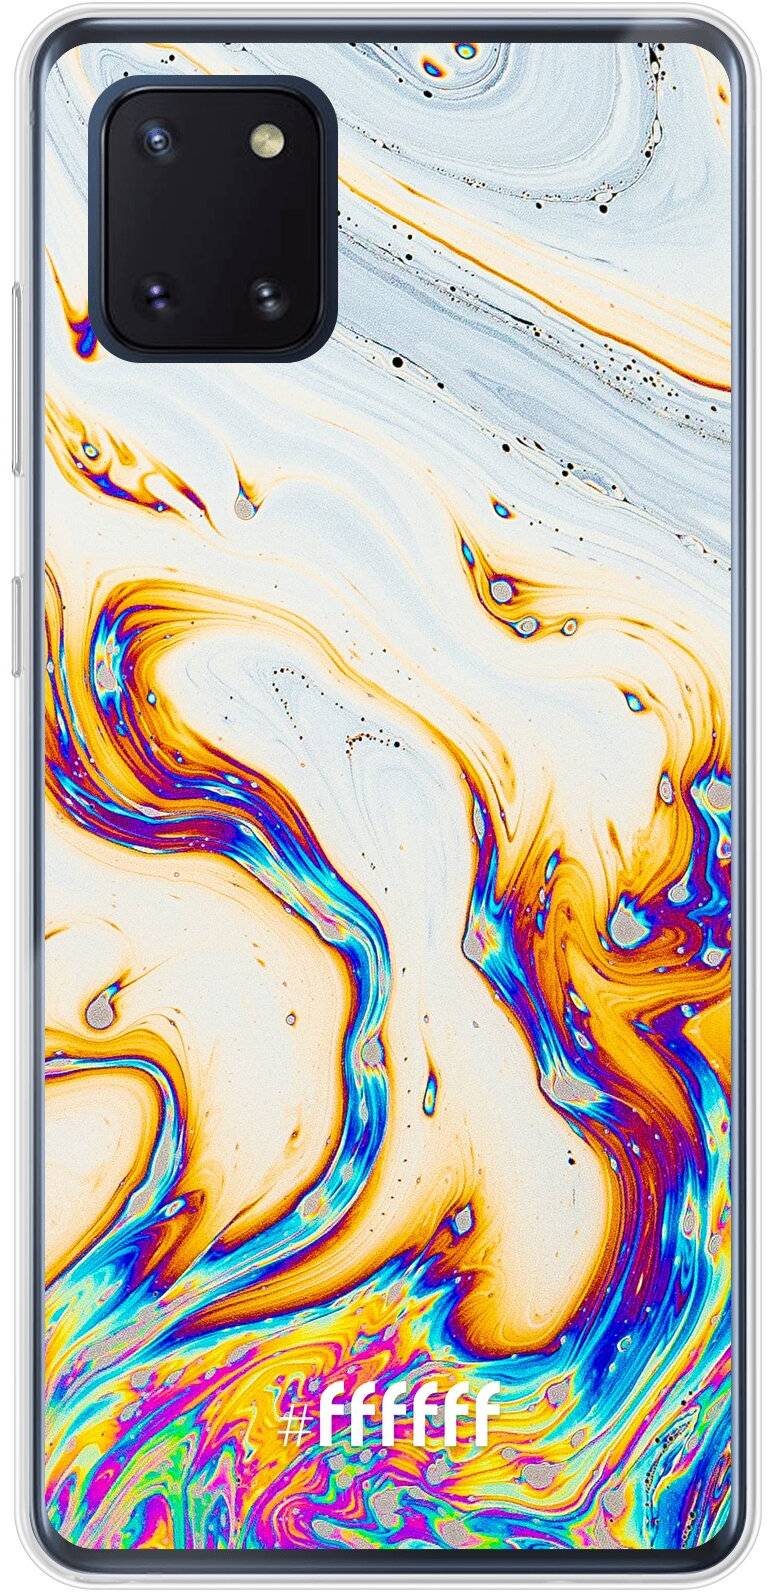 Bubble Texture Galaxy Note 10 Lite